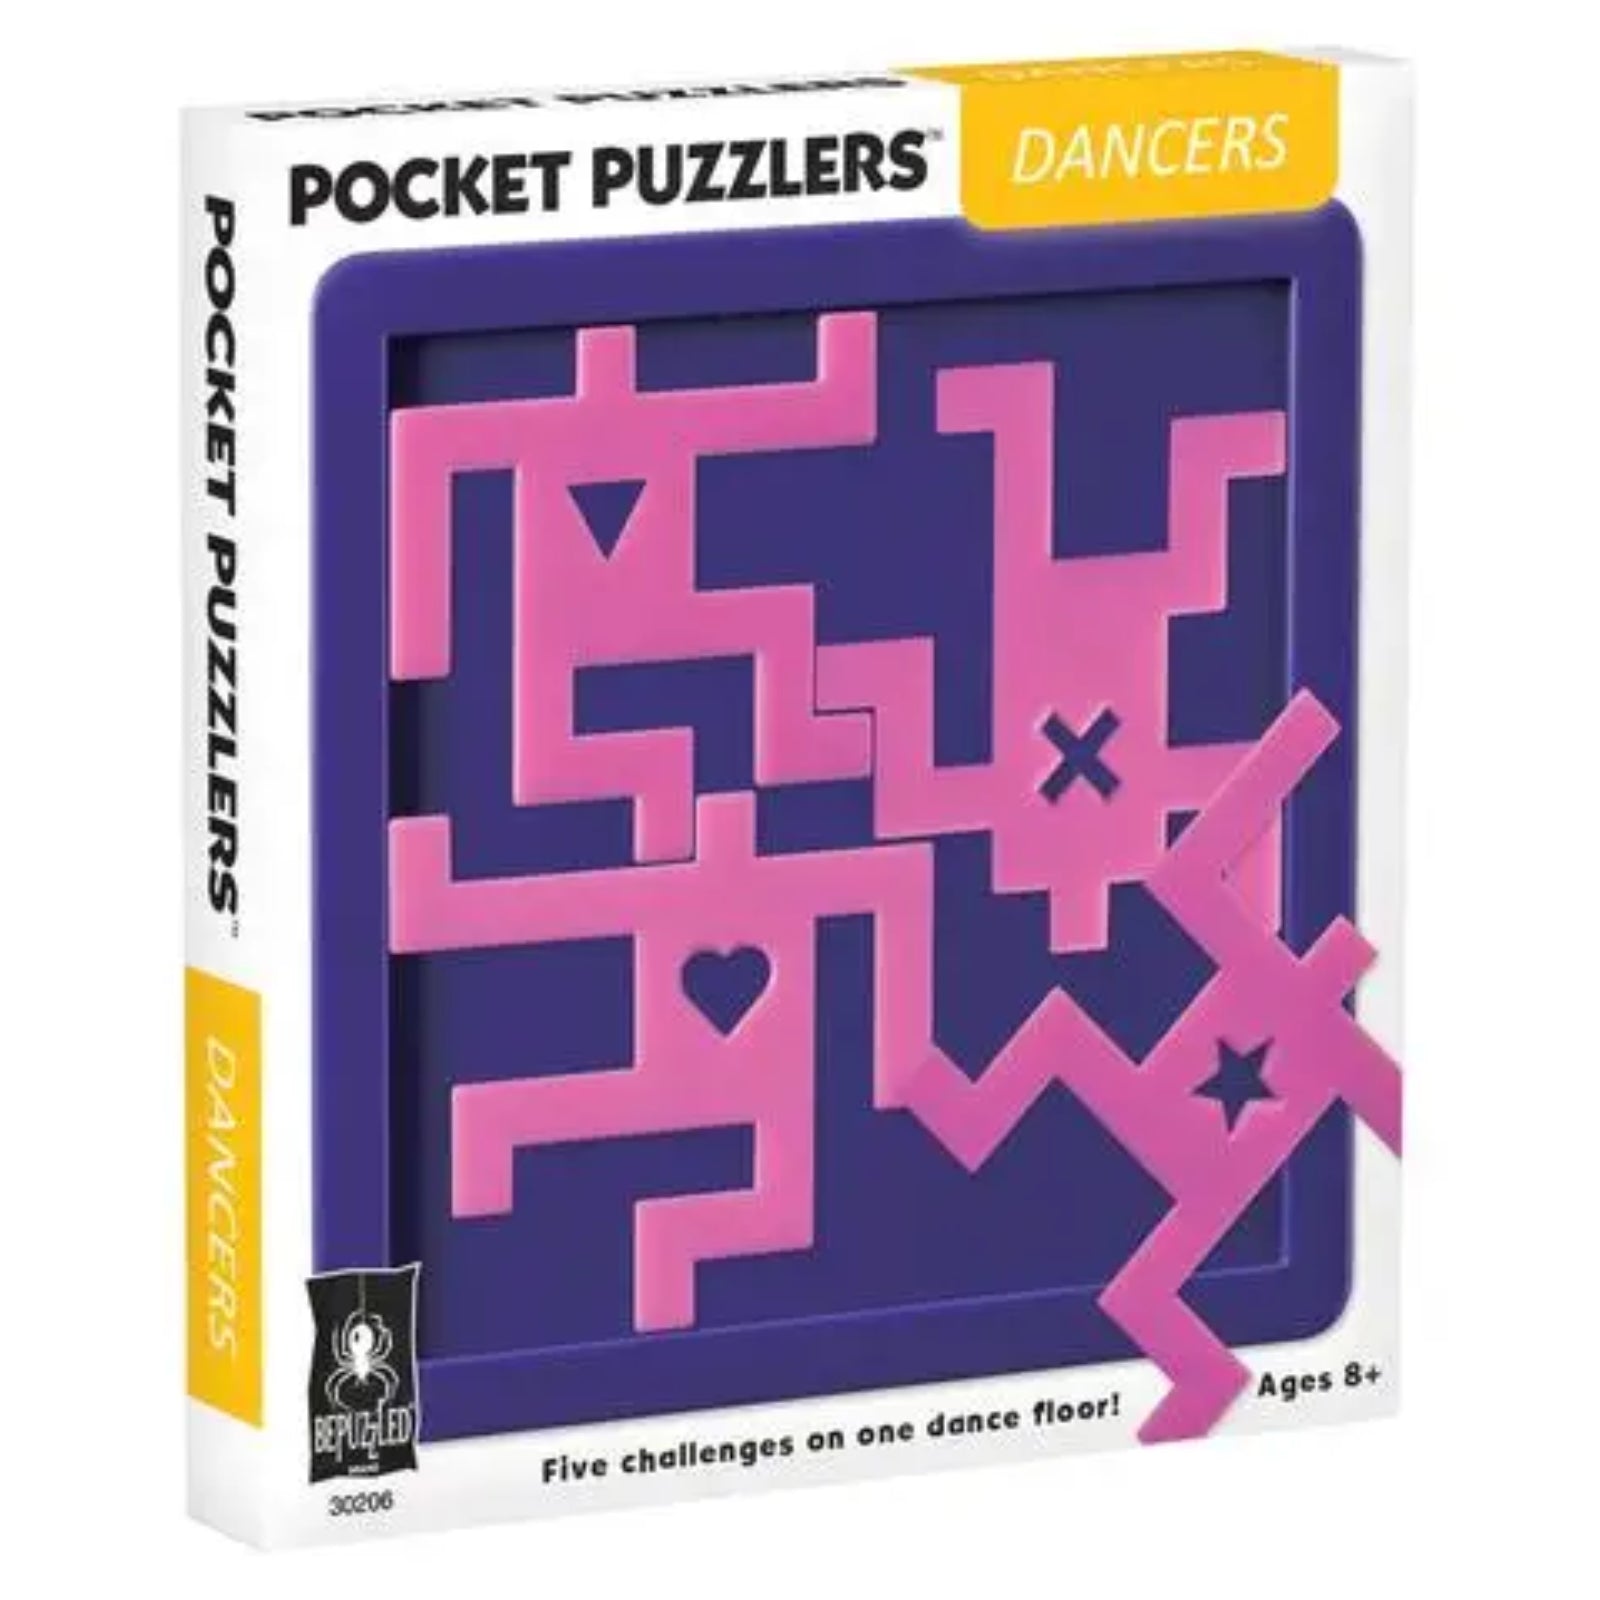 Pocket Puzzlers - Dancers - Bepuzzled